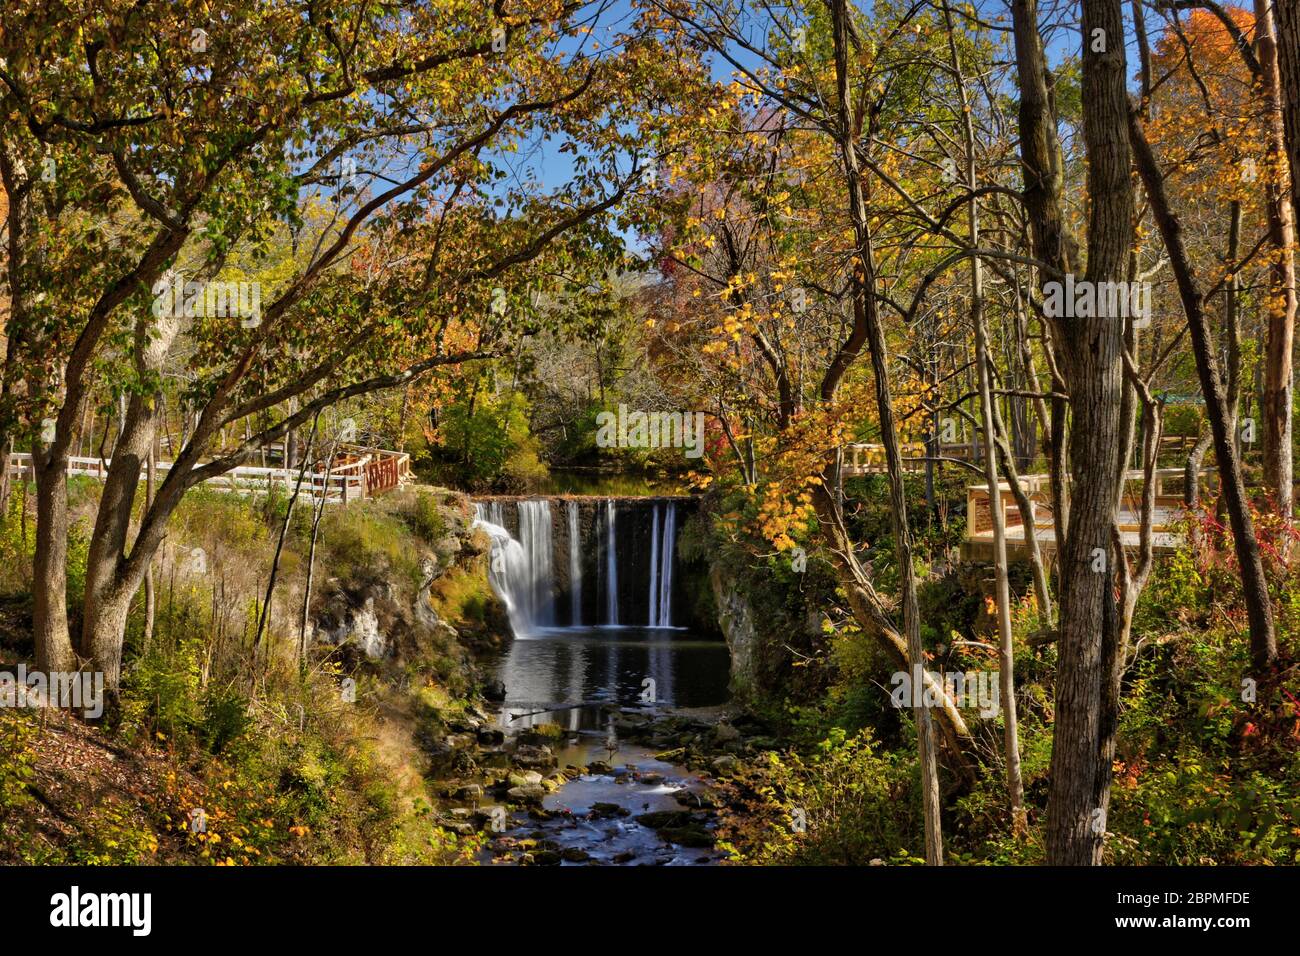 Cedar Cliff Falls am Massie Creek. Herbst. Peterson Park, Indian Mound Reserve, Cedarville, Ohio, USA. High Dynamic Range (HDR) Fotobearbeitung. Stockfoto